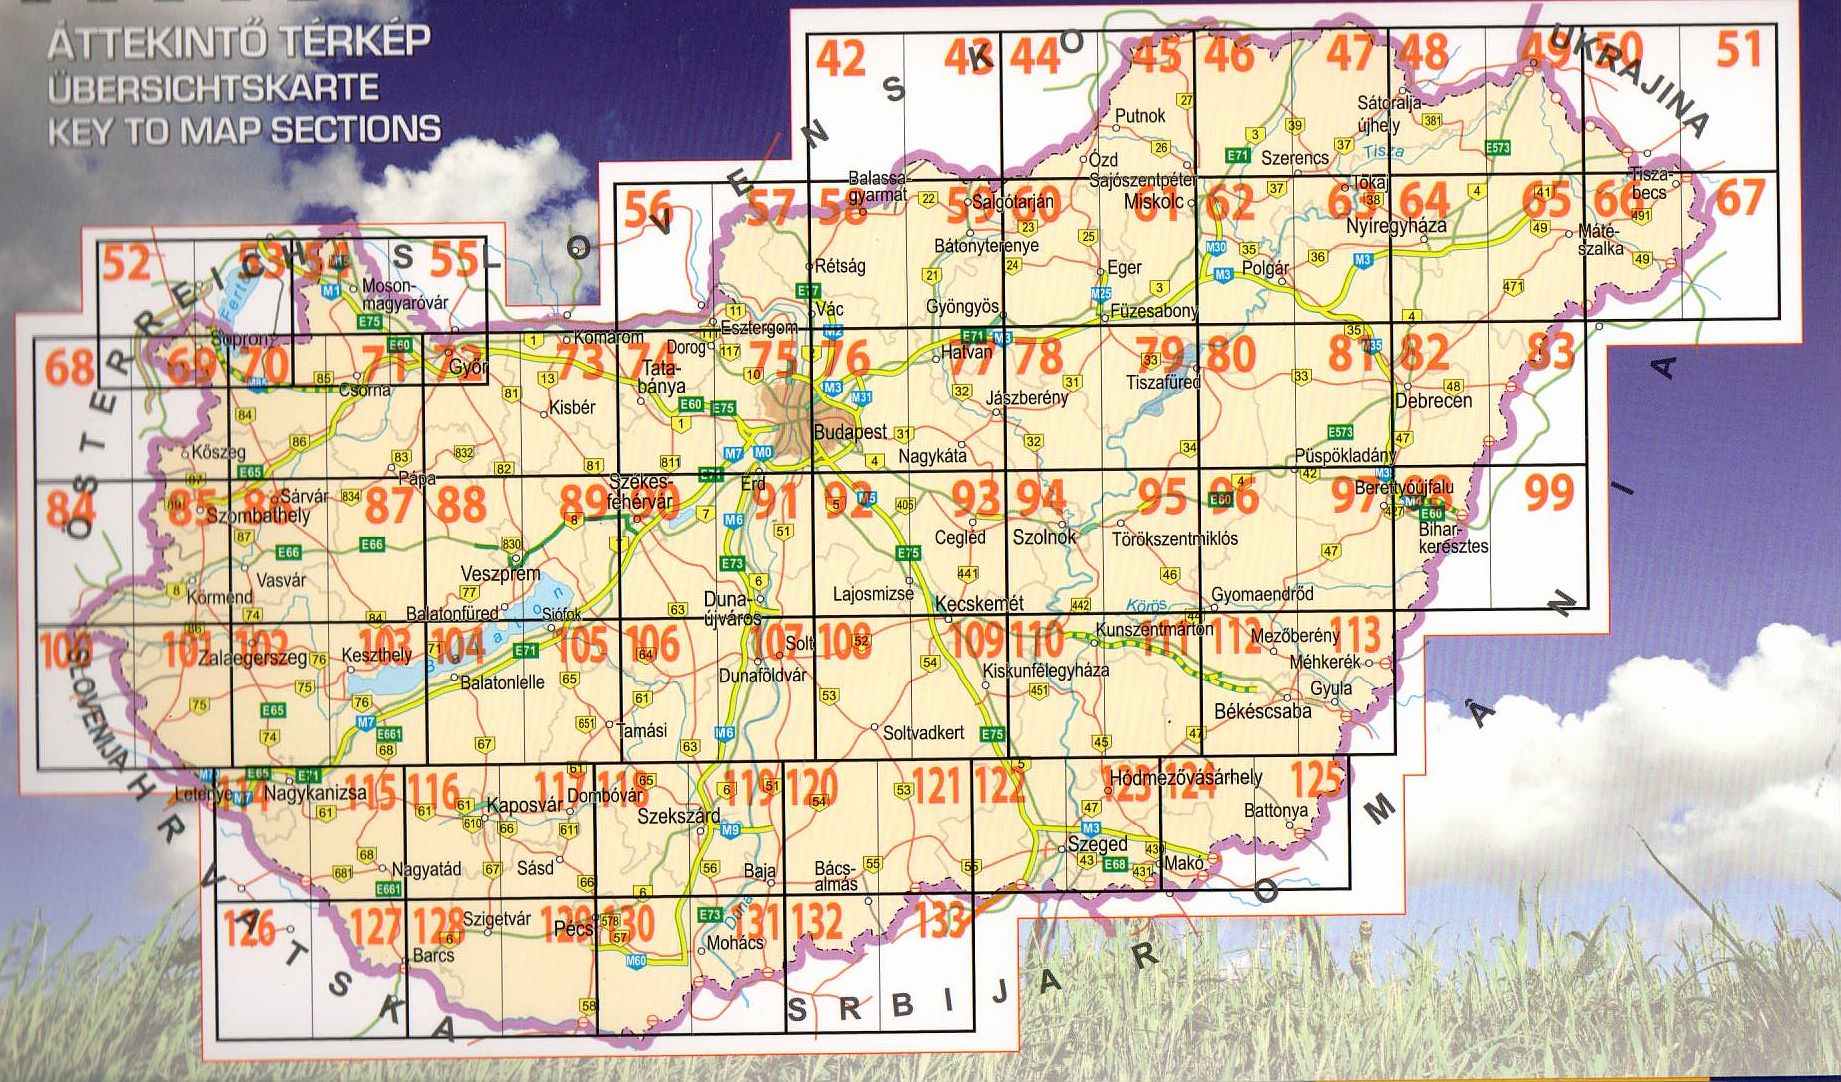 Hungary cycling guide/atlas: map sheet reference